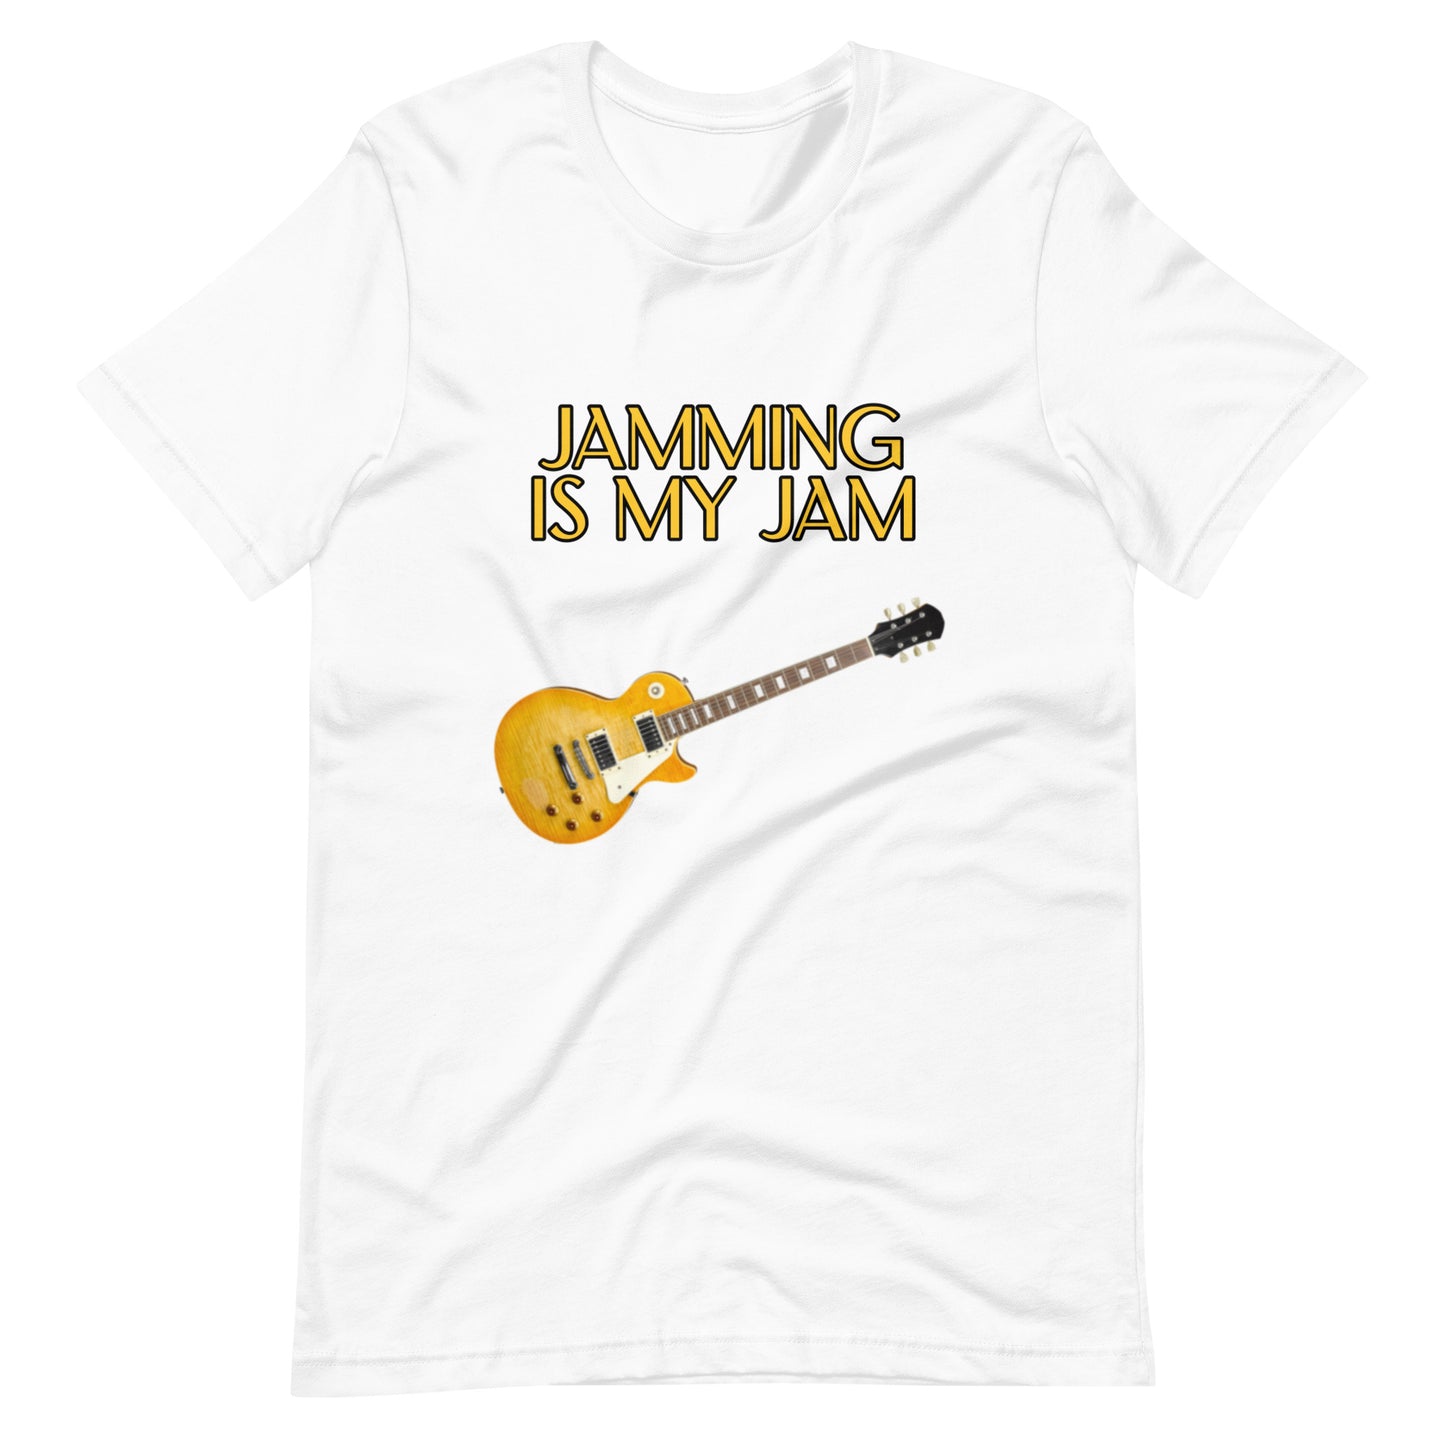 Jamming is my jam